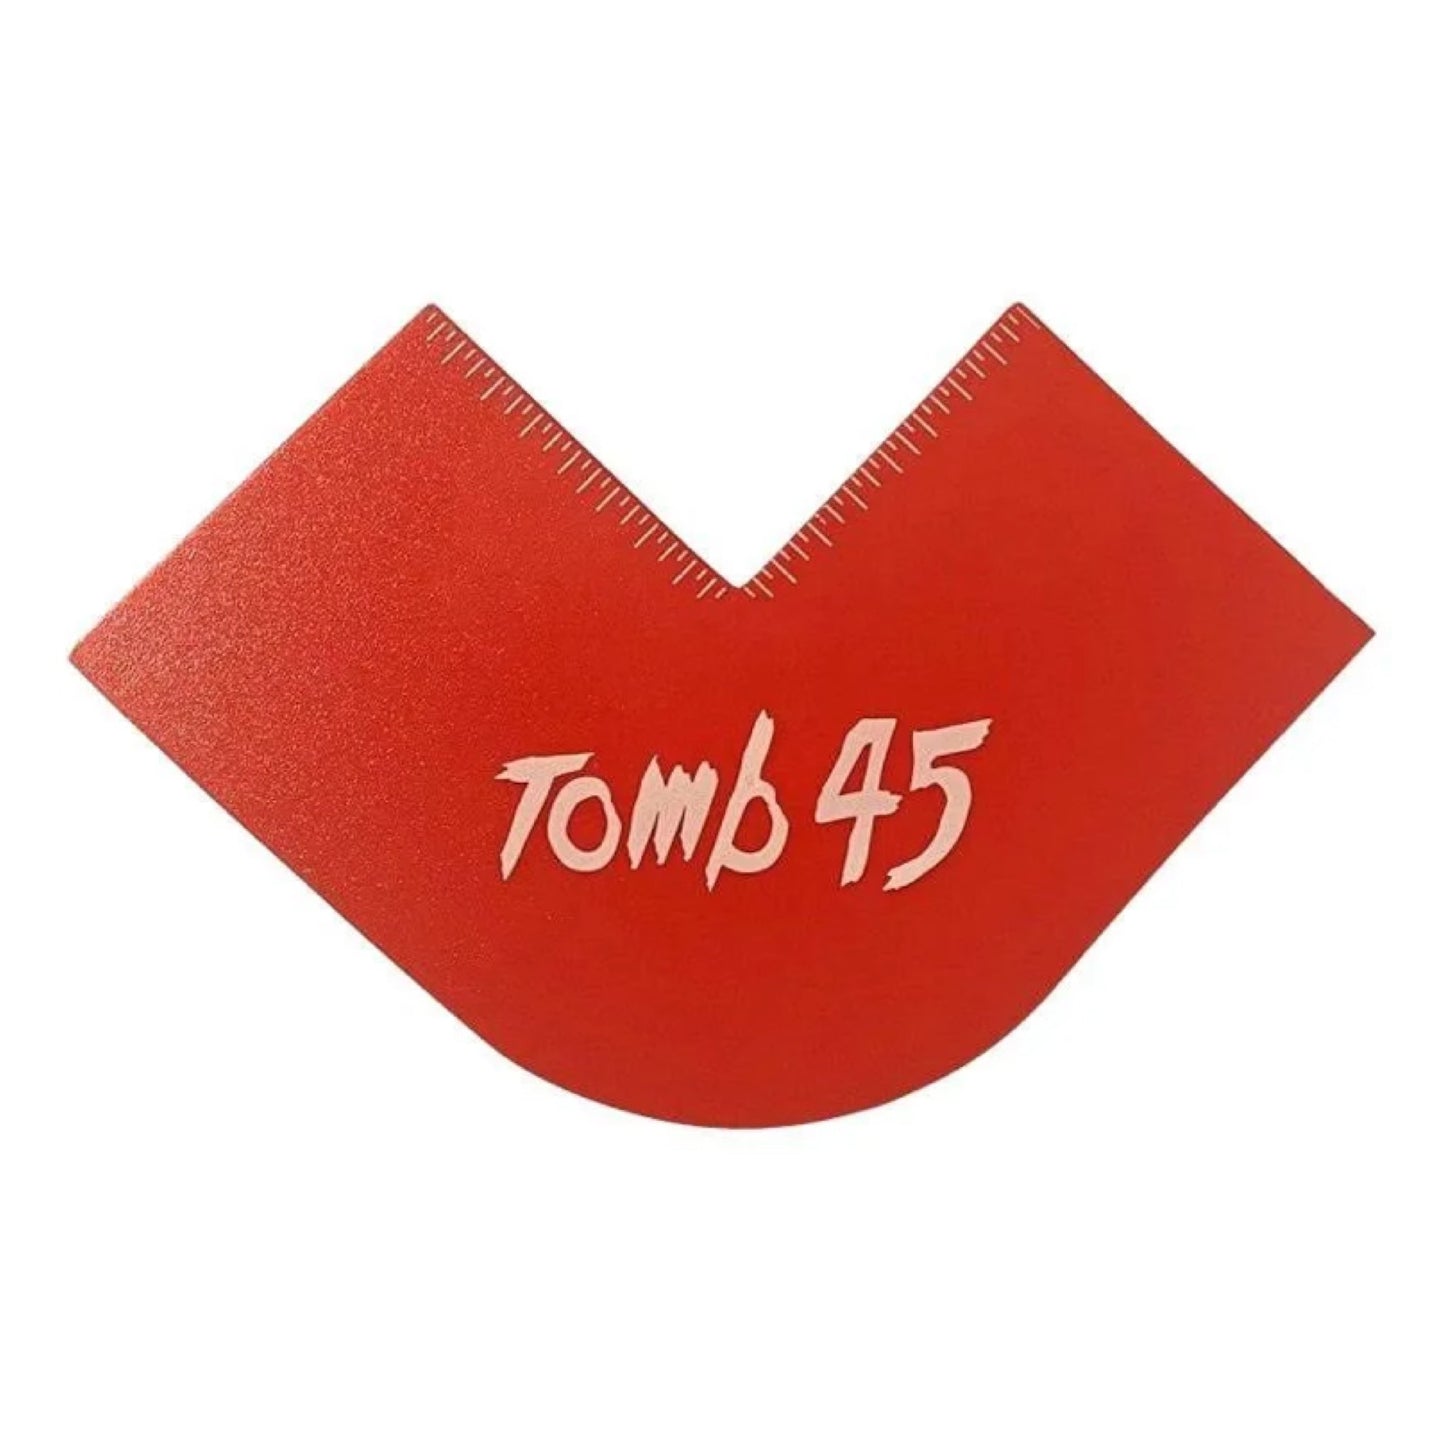 Tomb45 Red Klutch Card